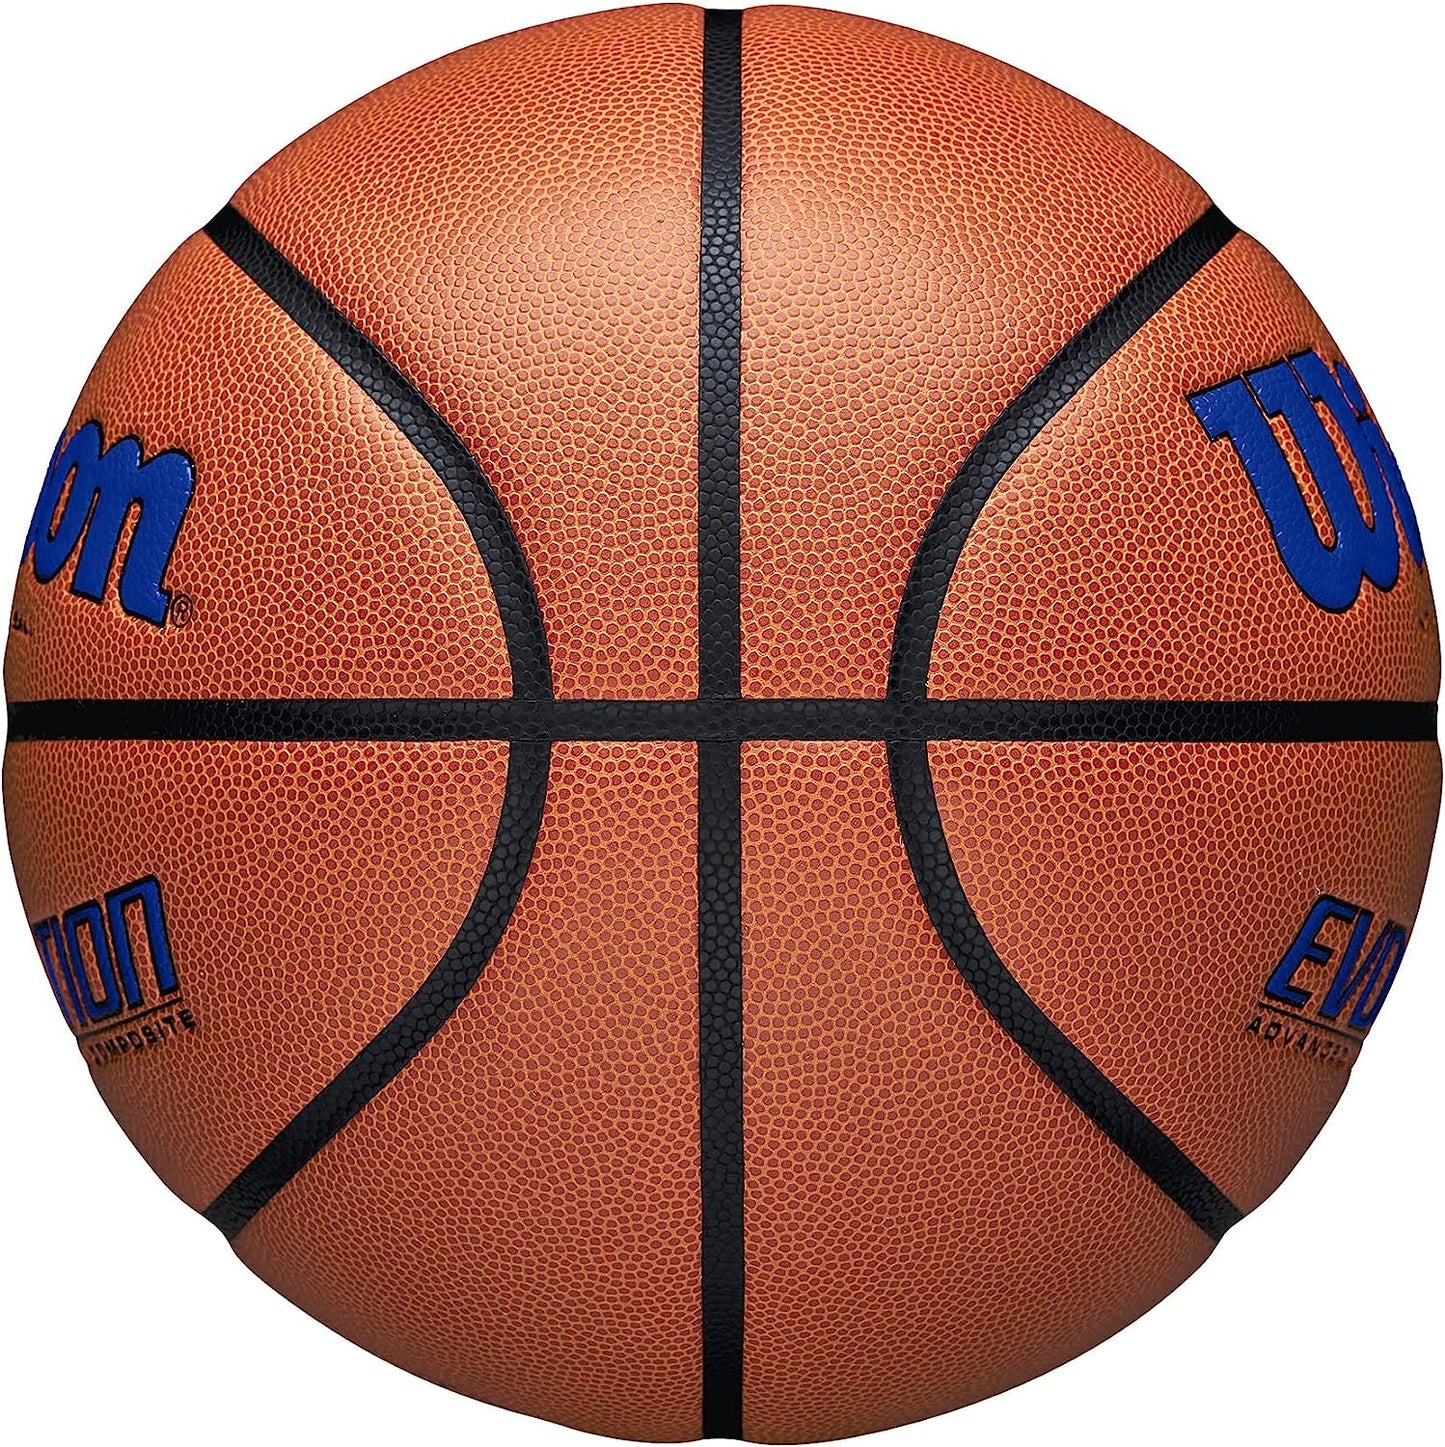 WILSON Evolution Game Basketball Royal Size 7 - 29.5" - ONE RUN SPORTS LLC